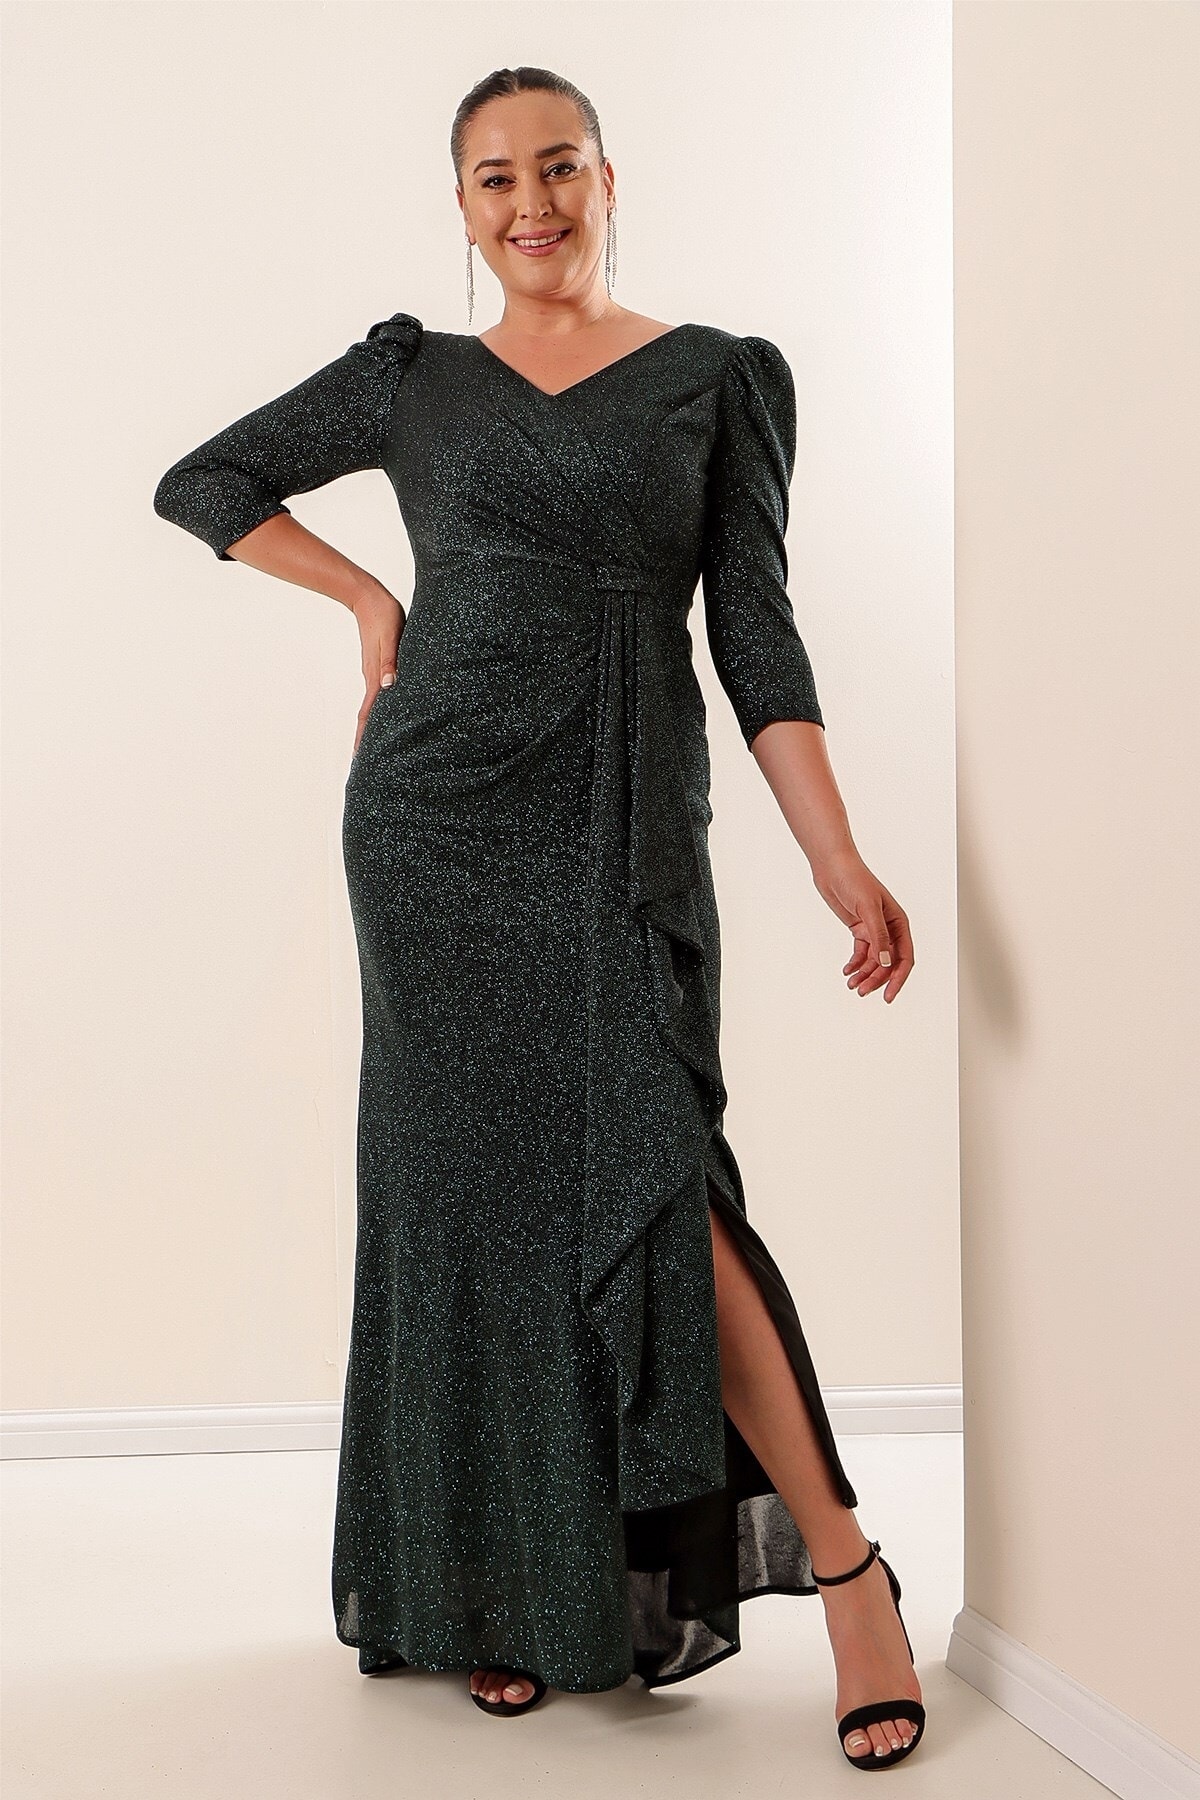 By Saygı Emerald Front Flounce Lined Silvery Plus Size Dress